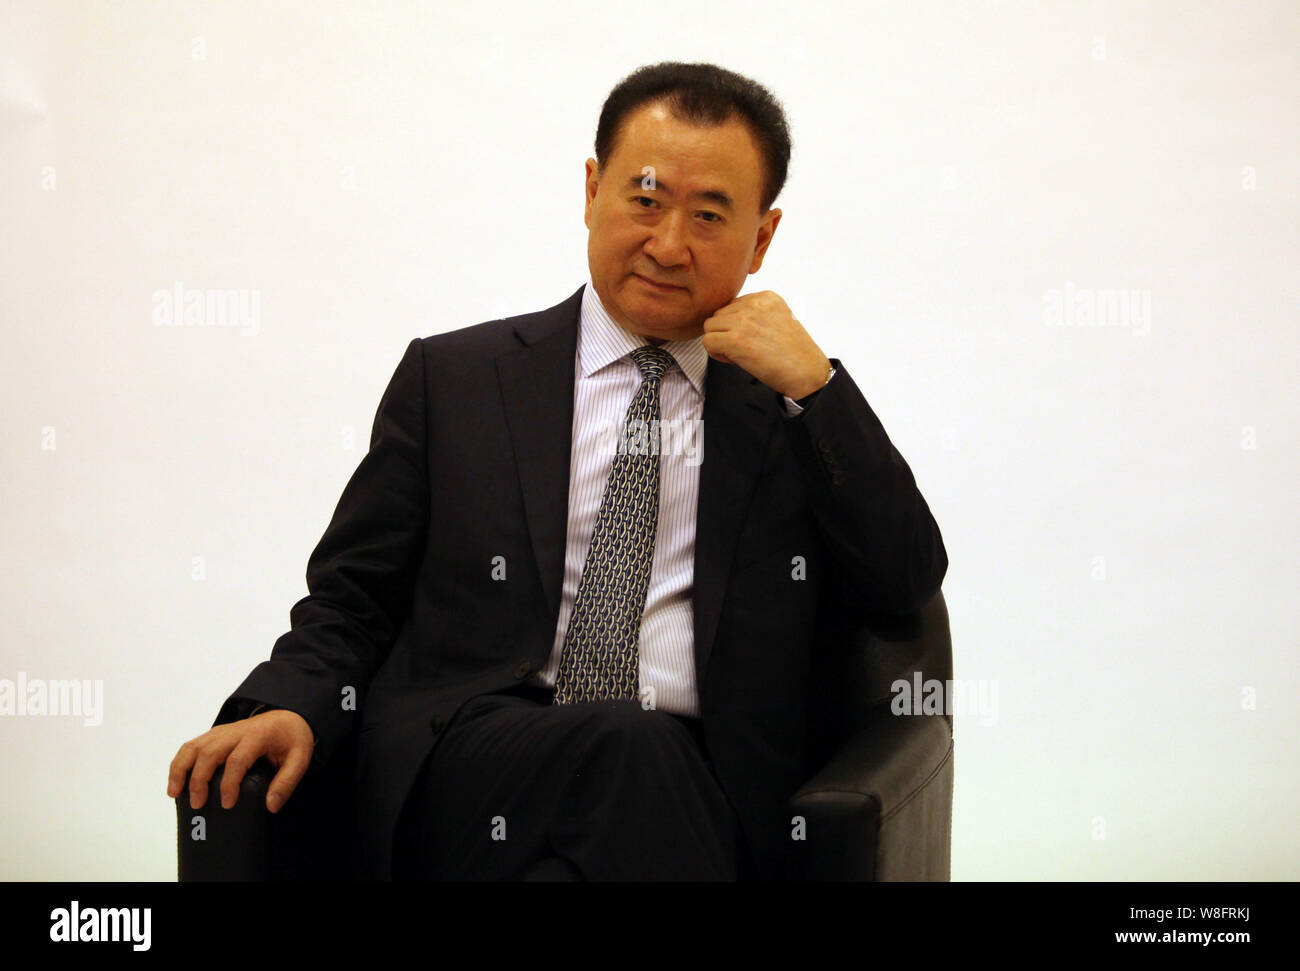 --FILE--Wang Jianlin, Chairman of Dalian Wanda Group, is pictured at an interview in Beijing, China, 29 April 2014.   Chinese real estate mogul Wang J Stock Photo